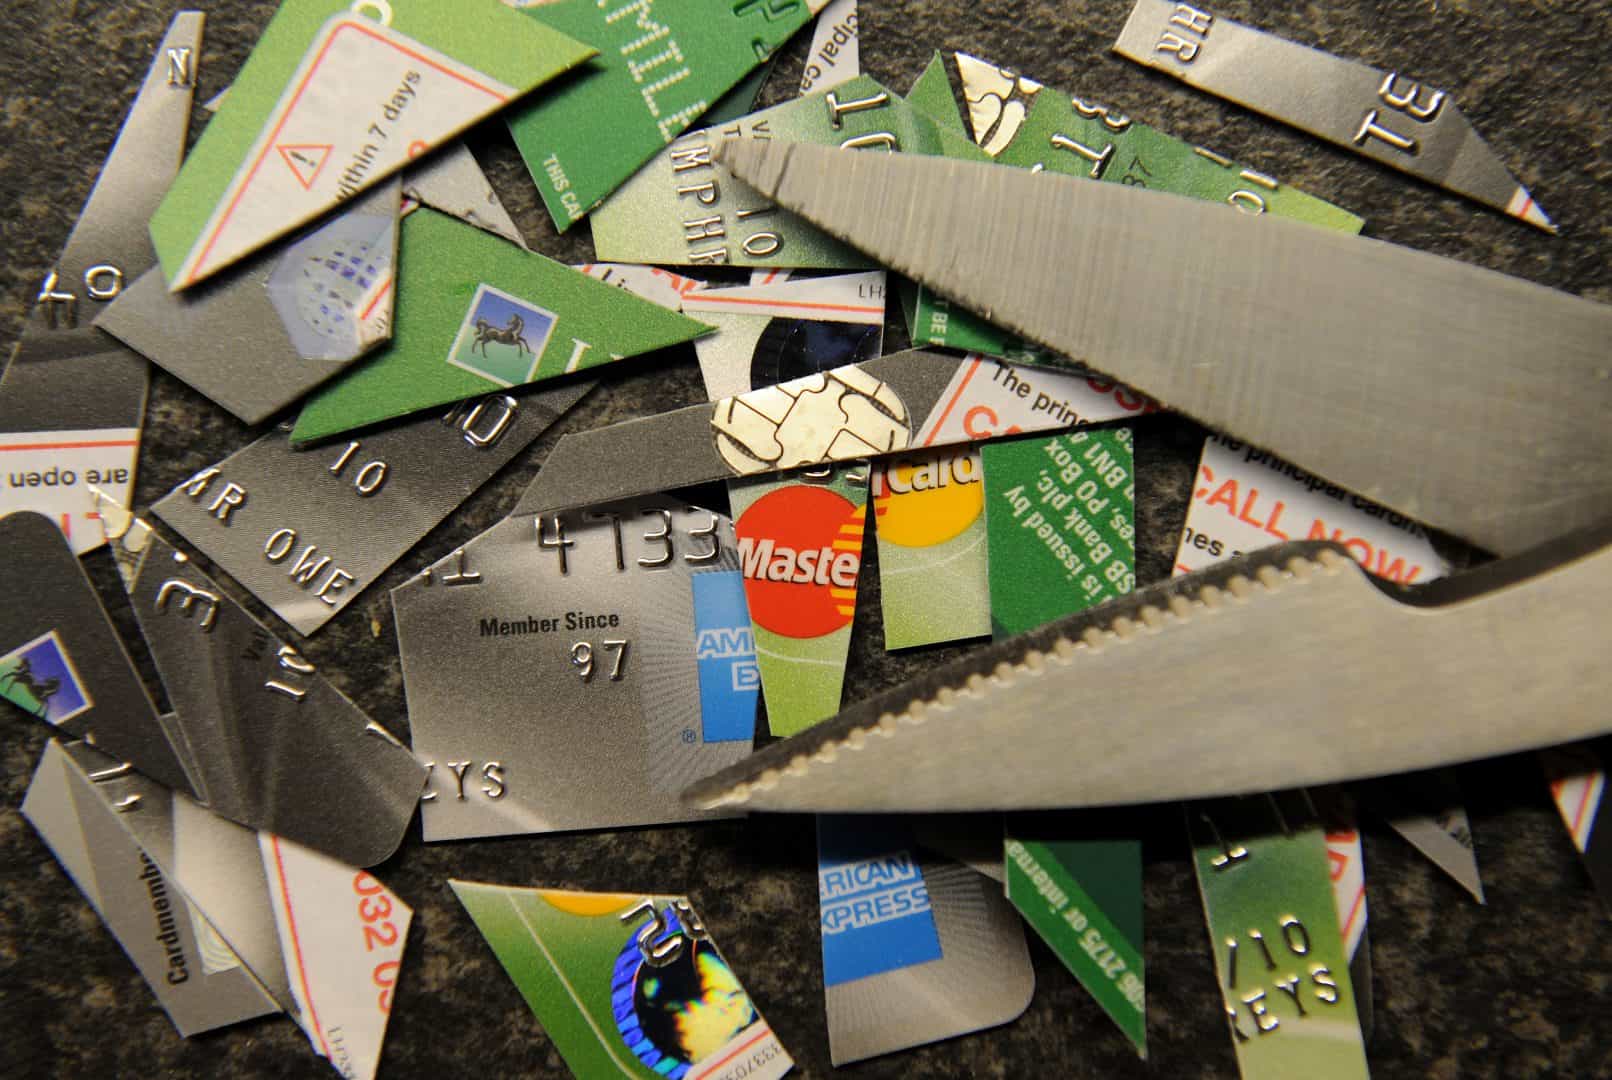 Big increase in average household debt, study suggests